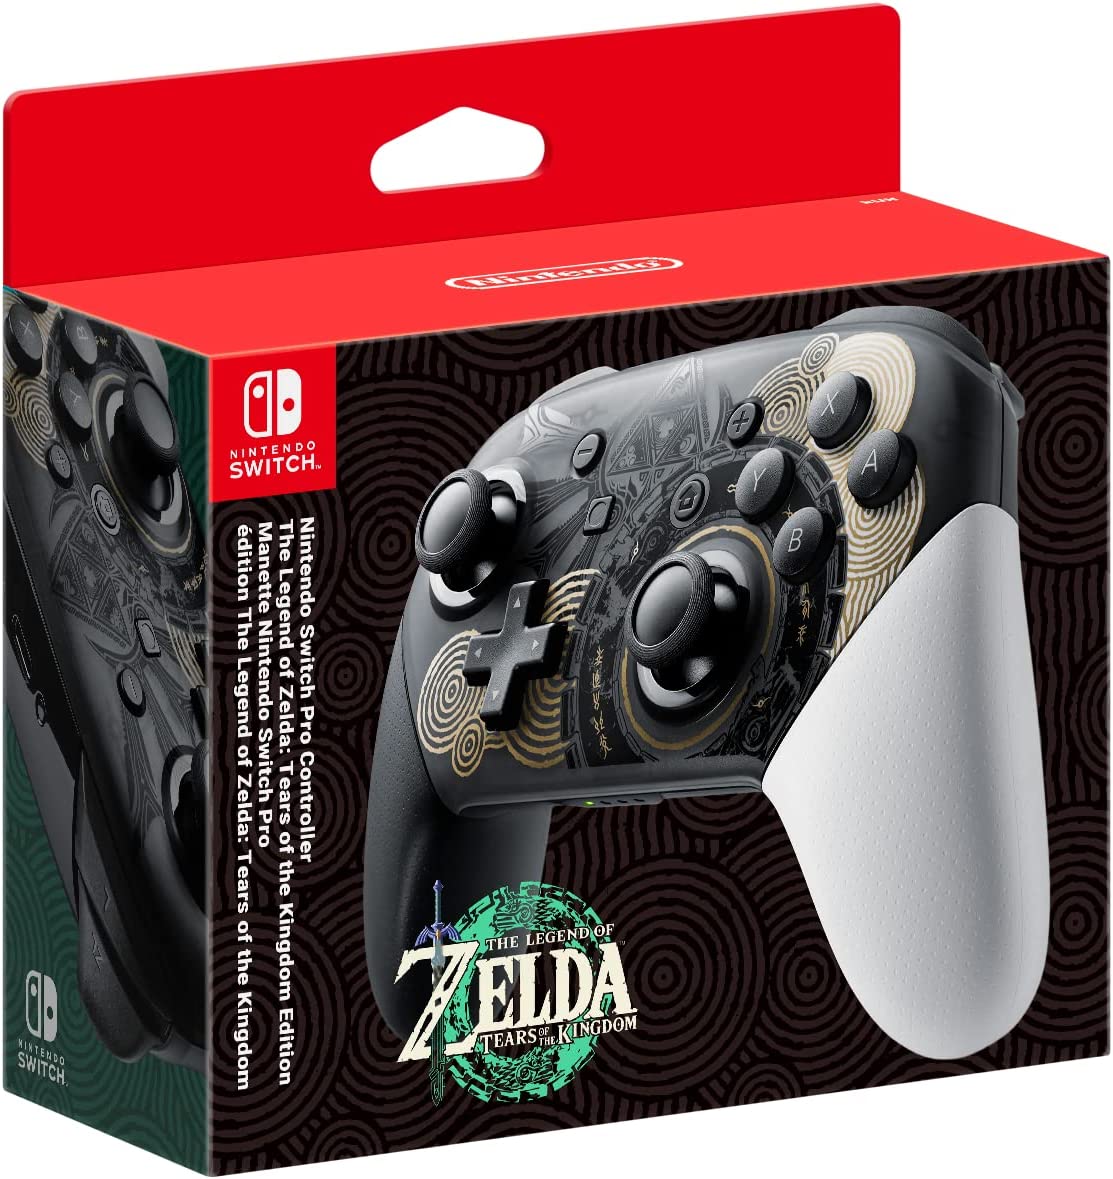 Nintendo Switch Pro Controller - The Legend of Zelda: Tears of the Kingdom Edition - Bstorekw